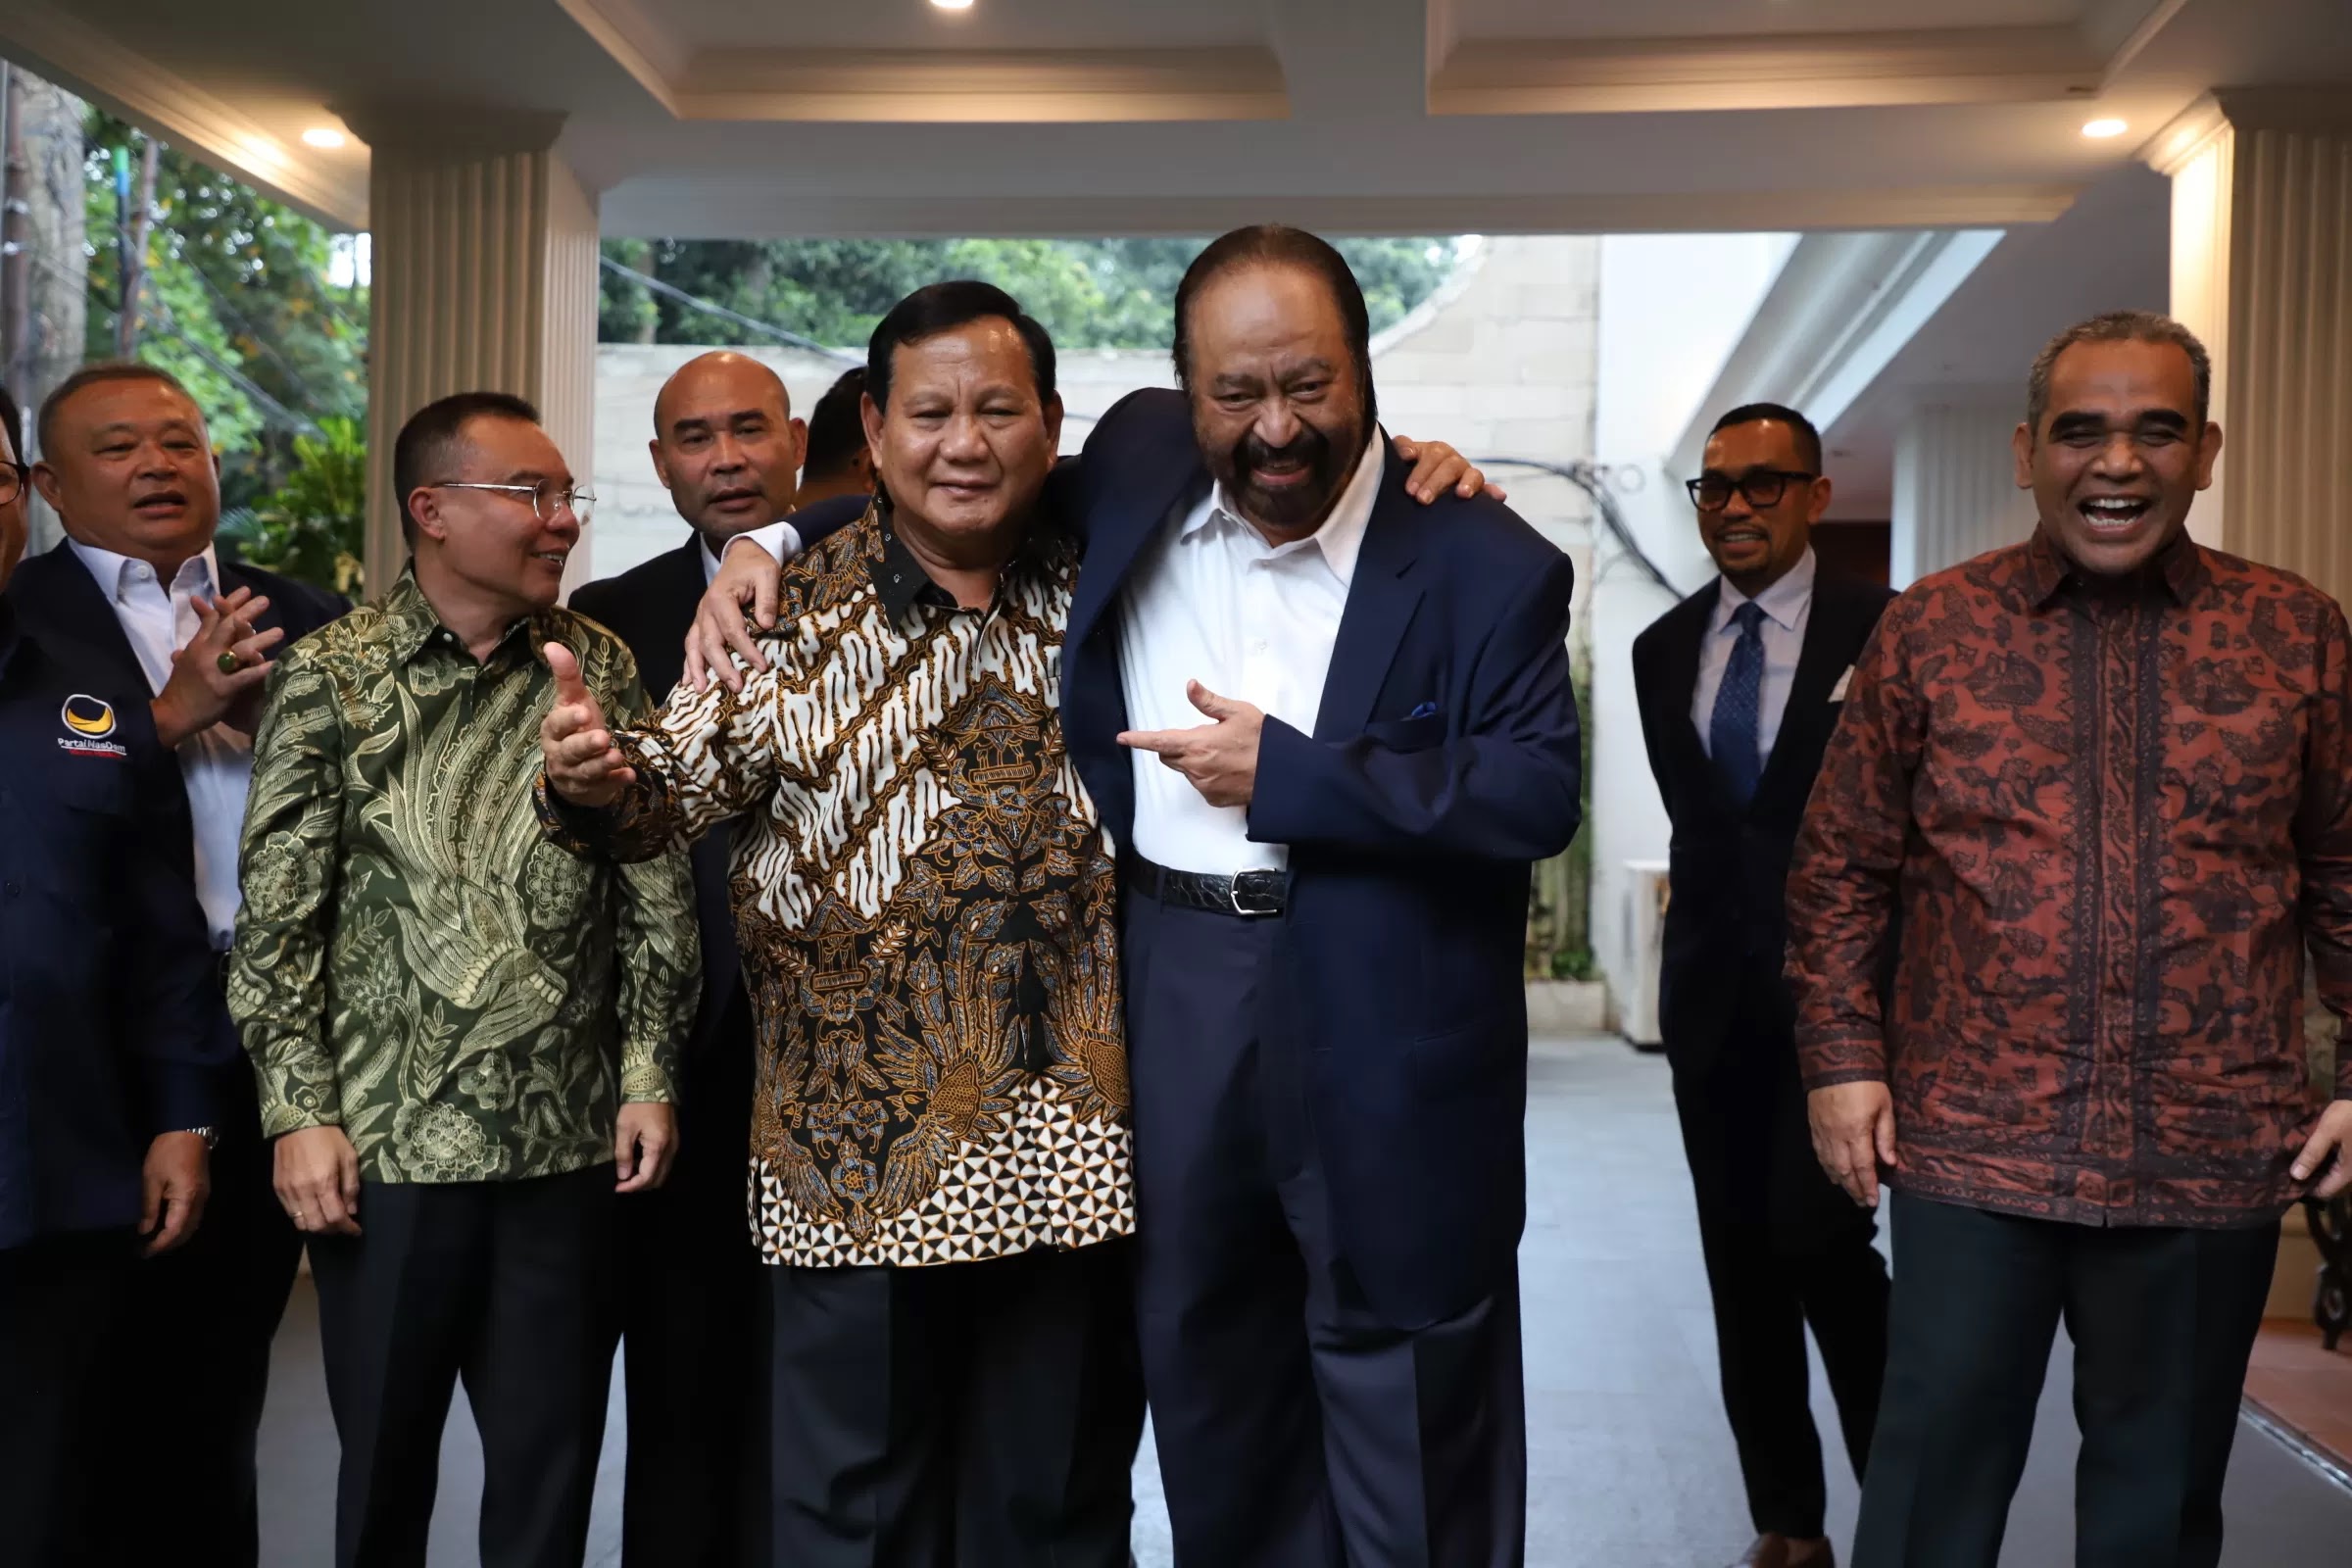 Soal Koalisi Gemuk Prabowo, Haidar: Jangan Sampai Anak di Pangku Dilepaskan, Beruk di Rimba Disusukan